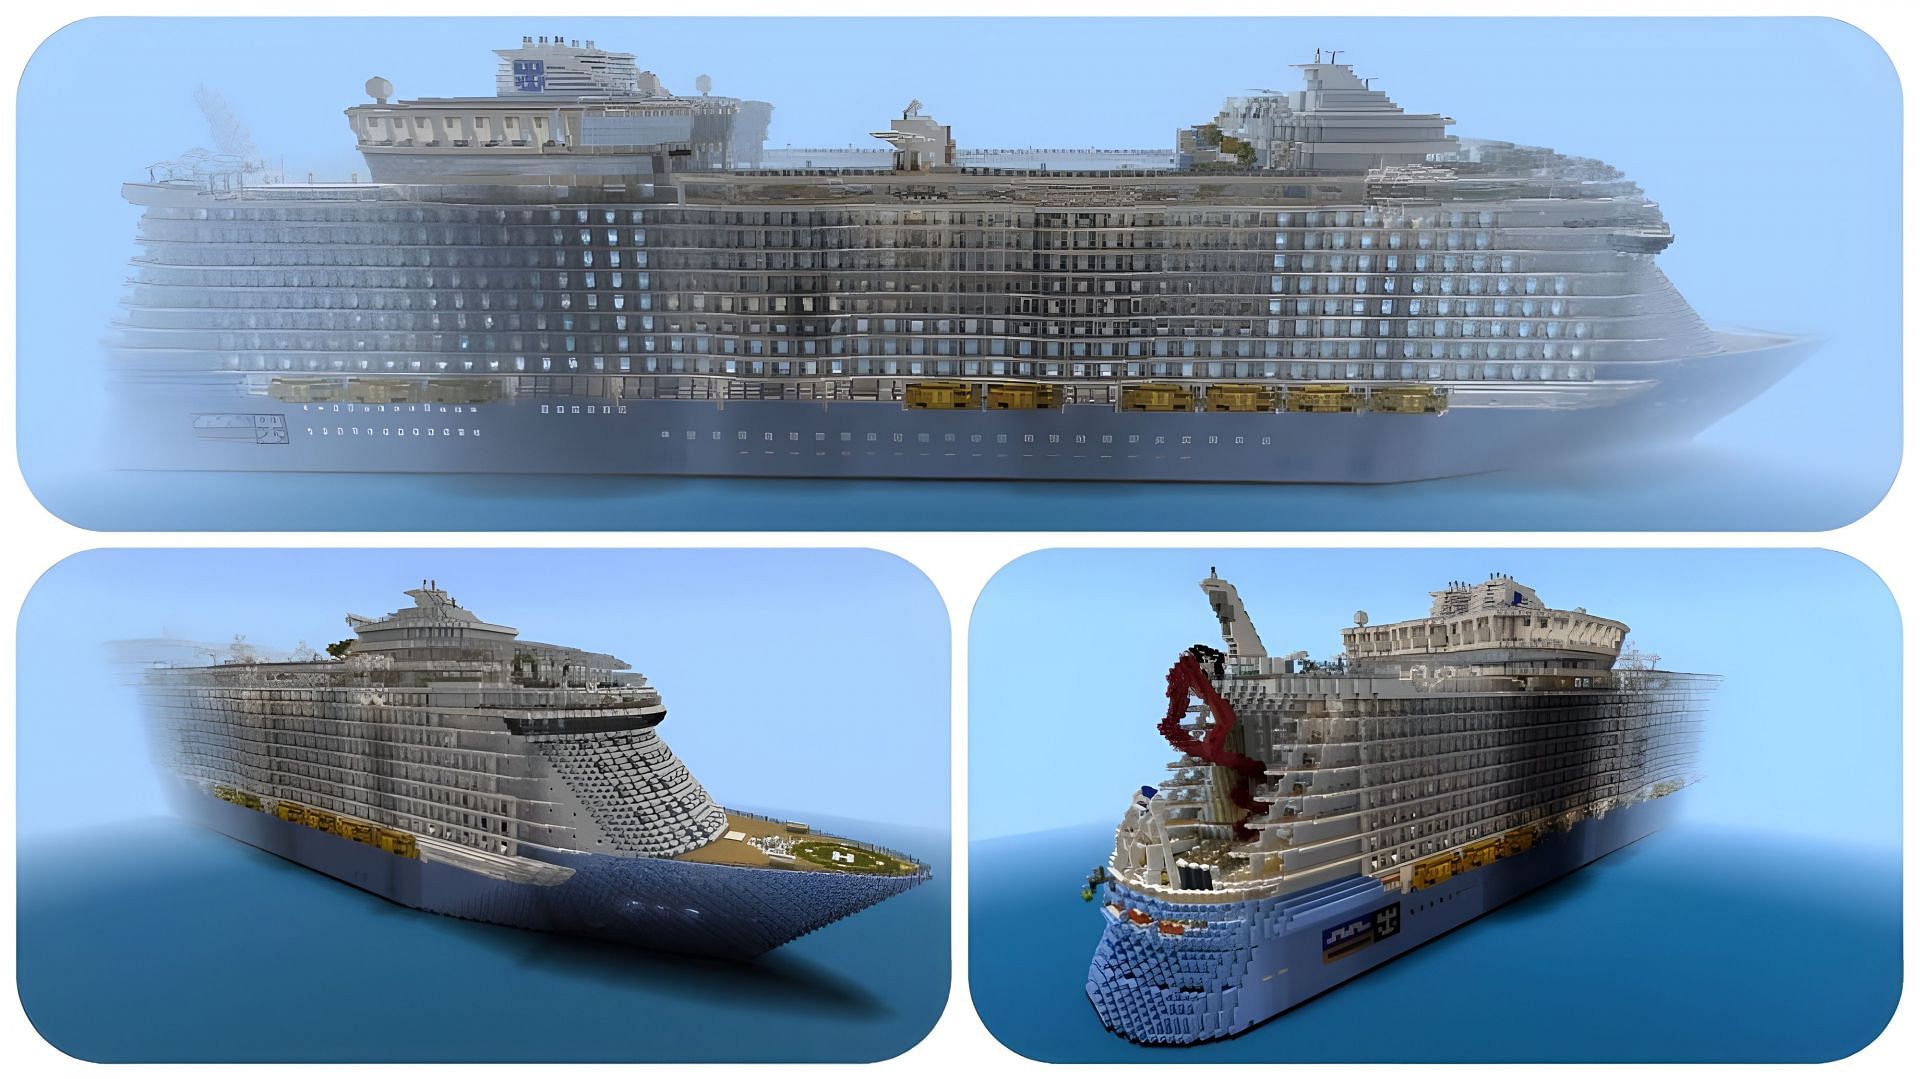 The Harmony of the Seas Cruise Ship (Image via YouTube/NewFreedomMC)